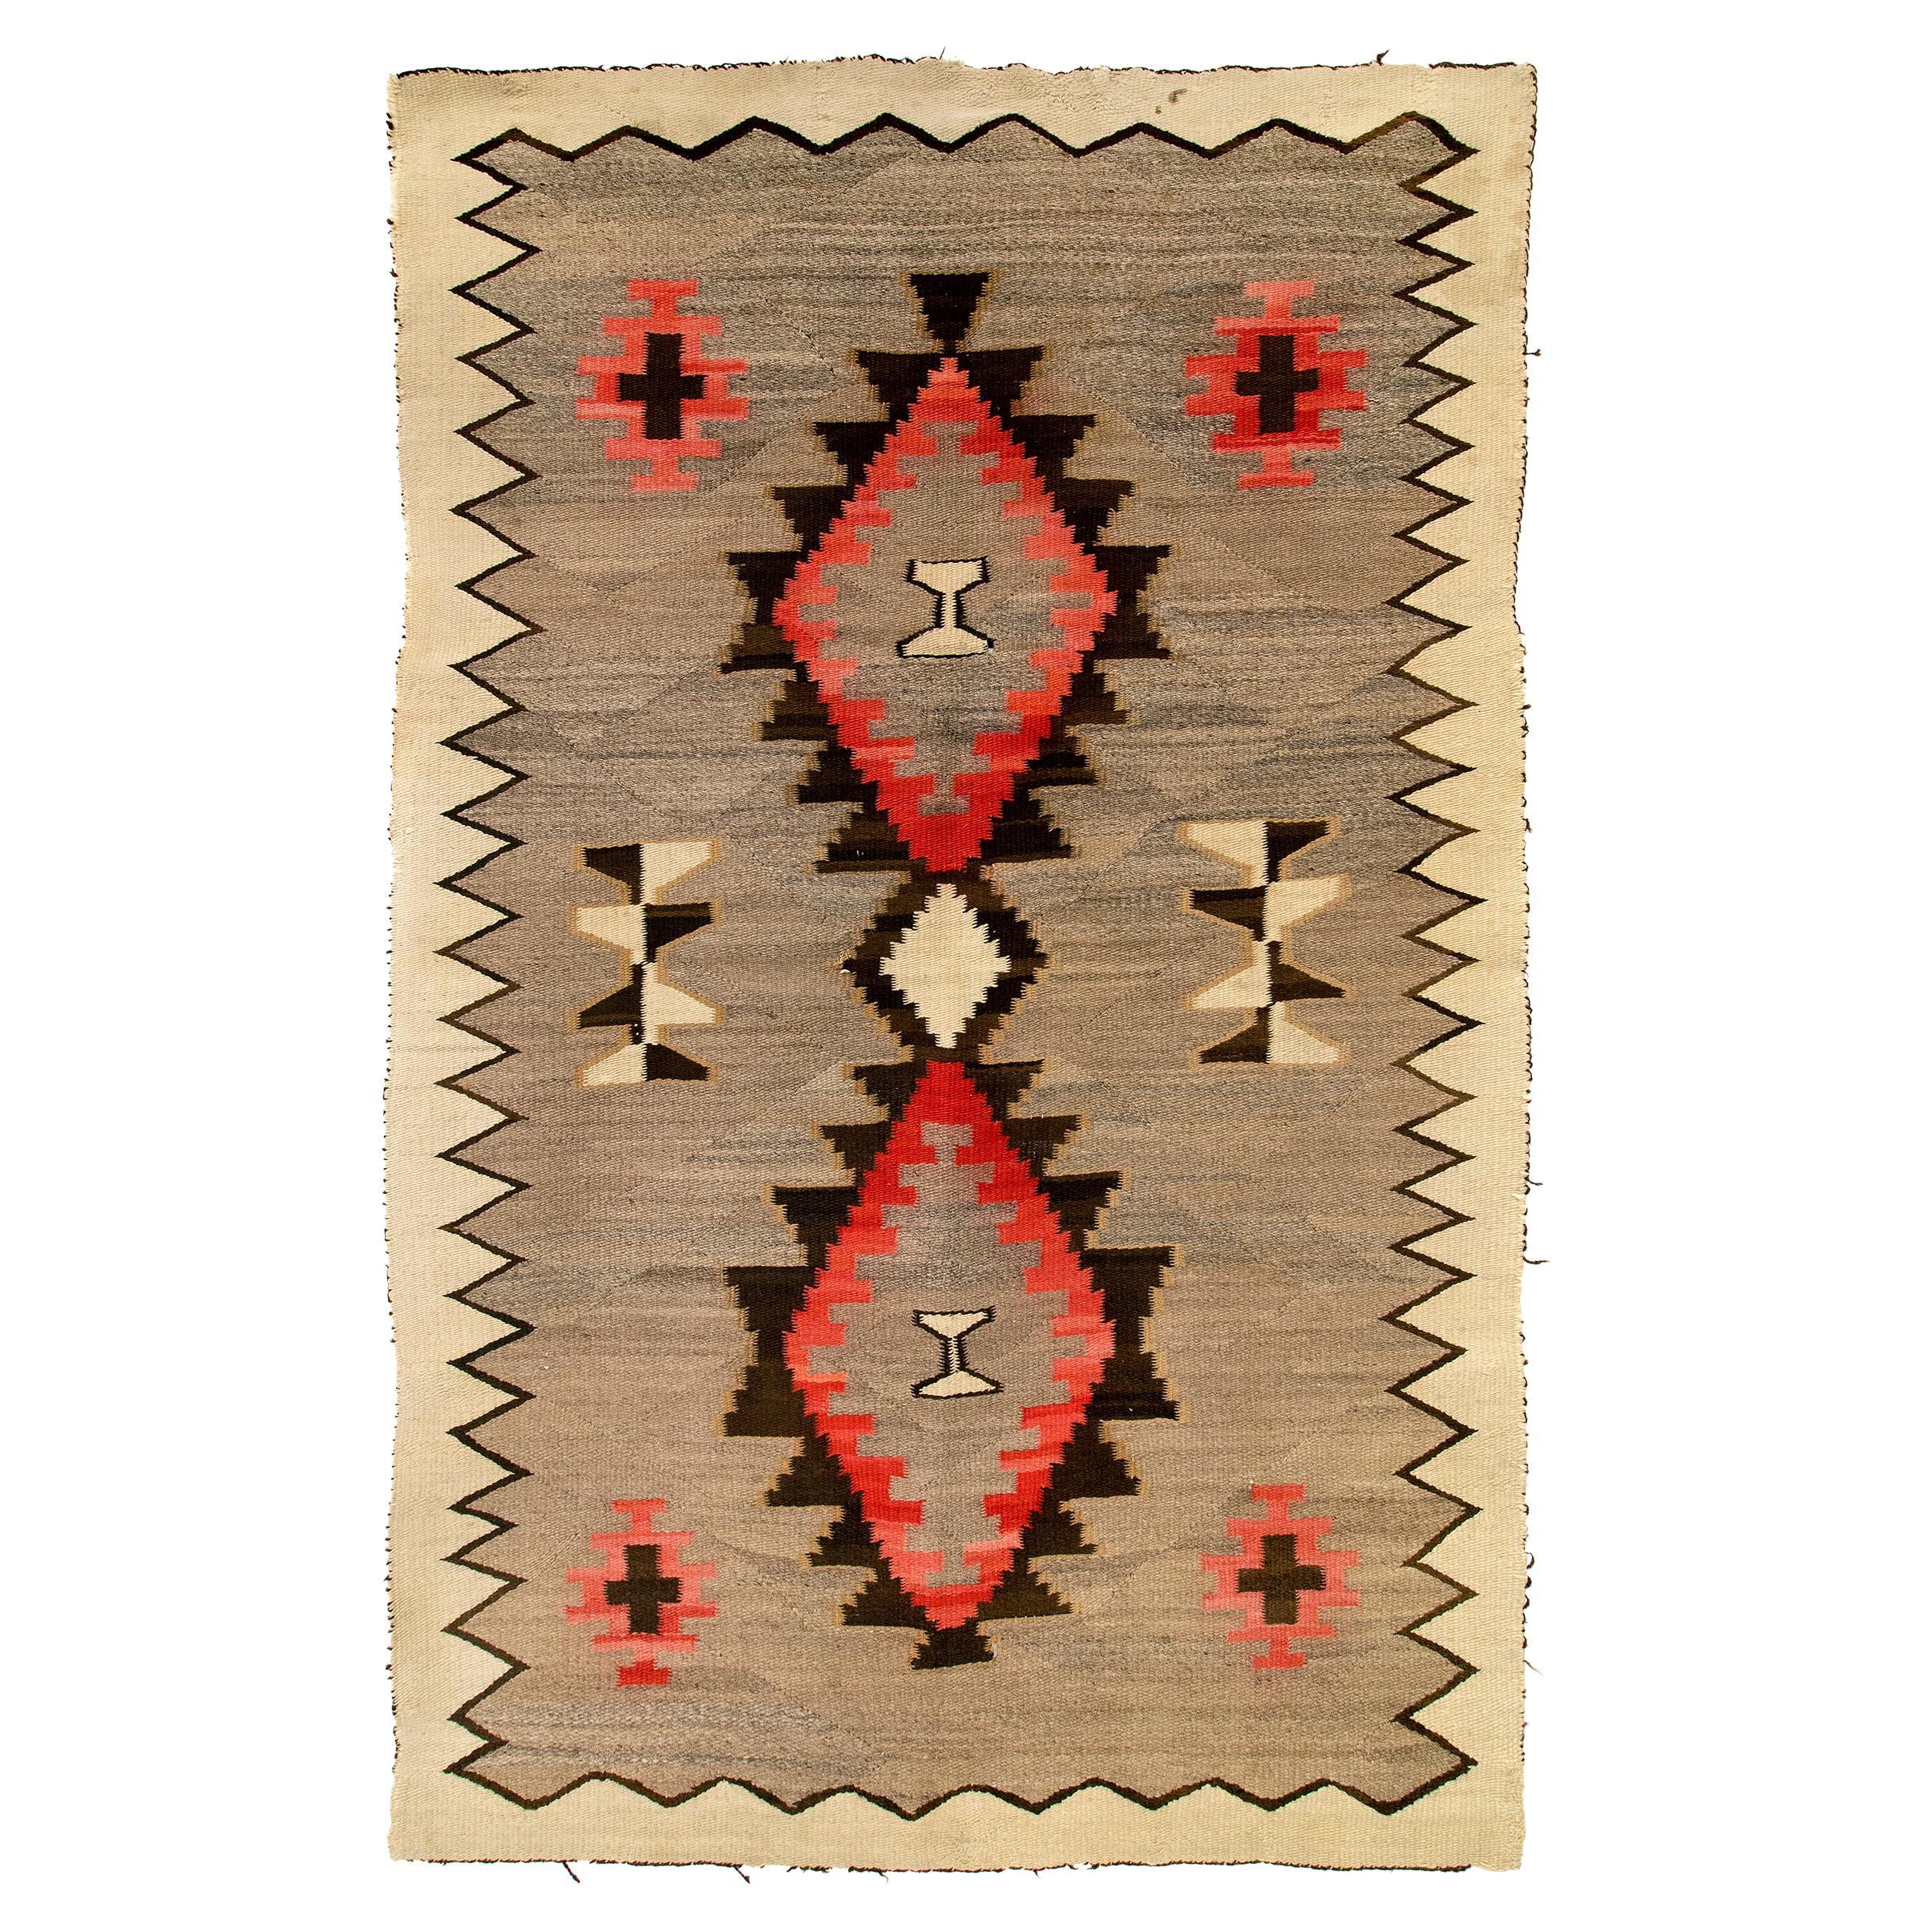 Vintage Navajo Rugs - 98 For Sale on 1stDibs